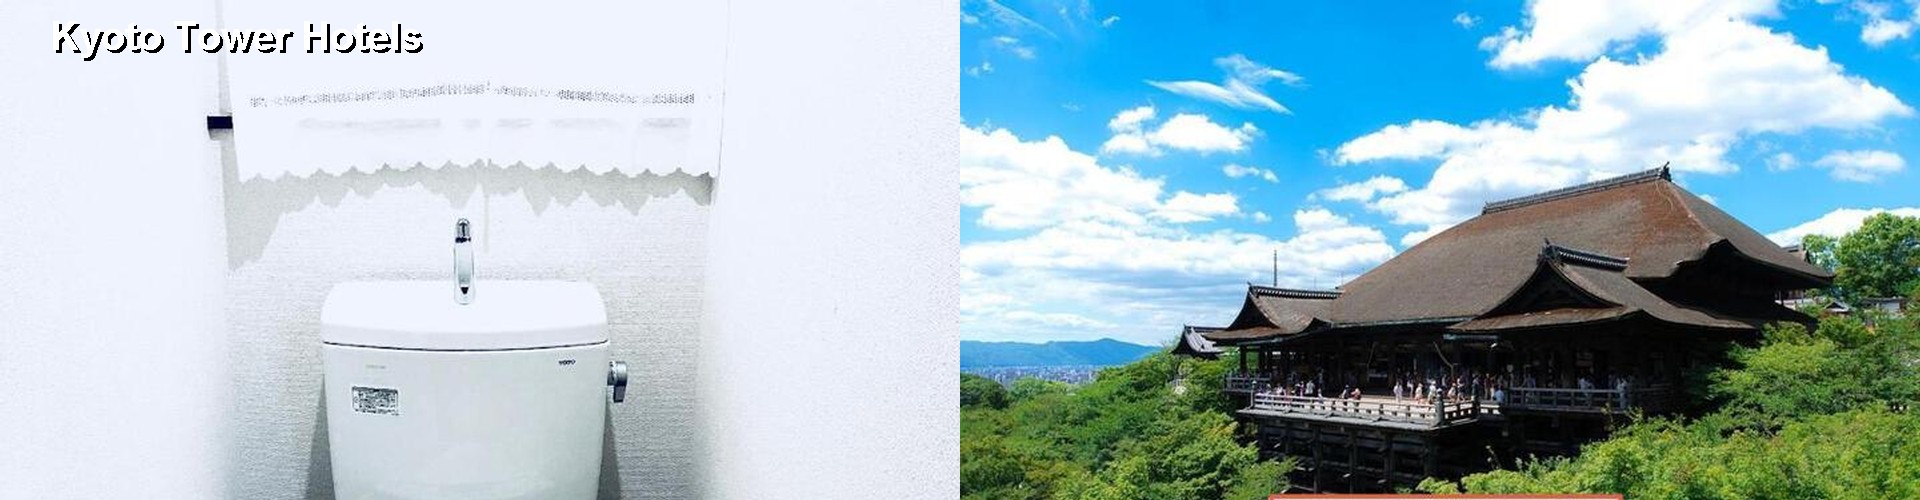 5 Best Hotels near Kyoto Tower